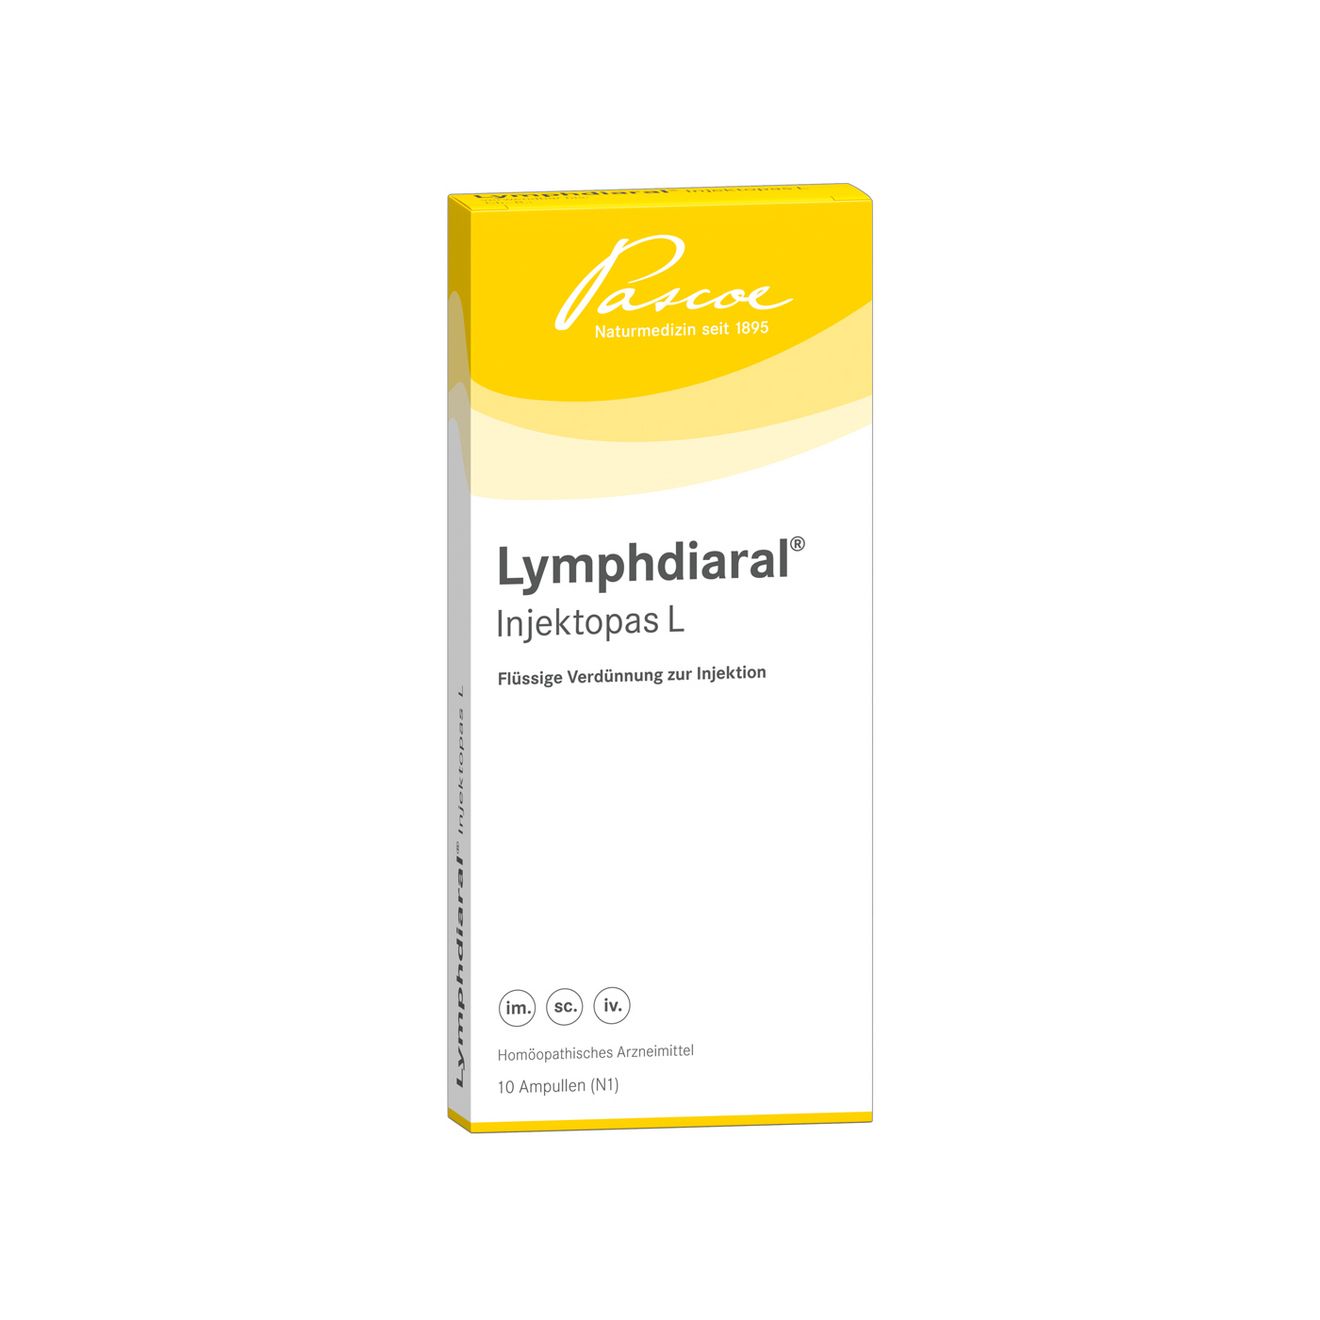 Lymphdiaral-Injektopas L 10 x 2 ml Packshot PZN 00788407